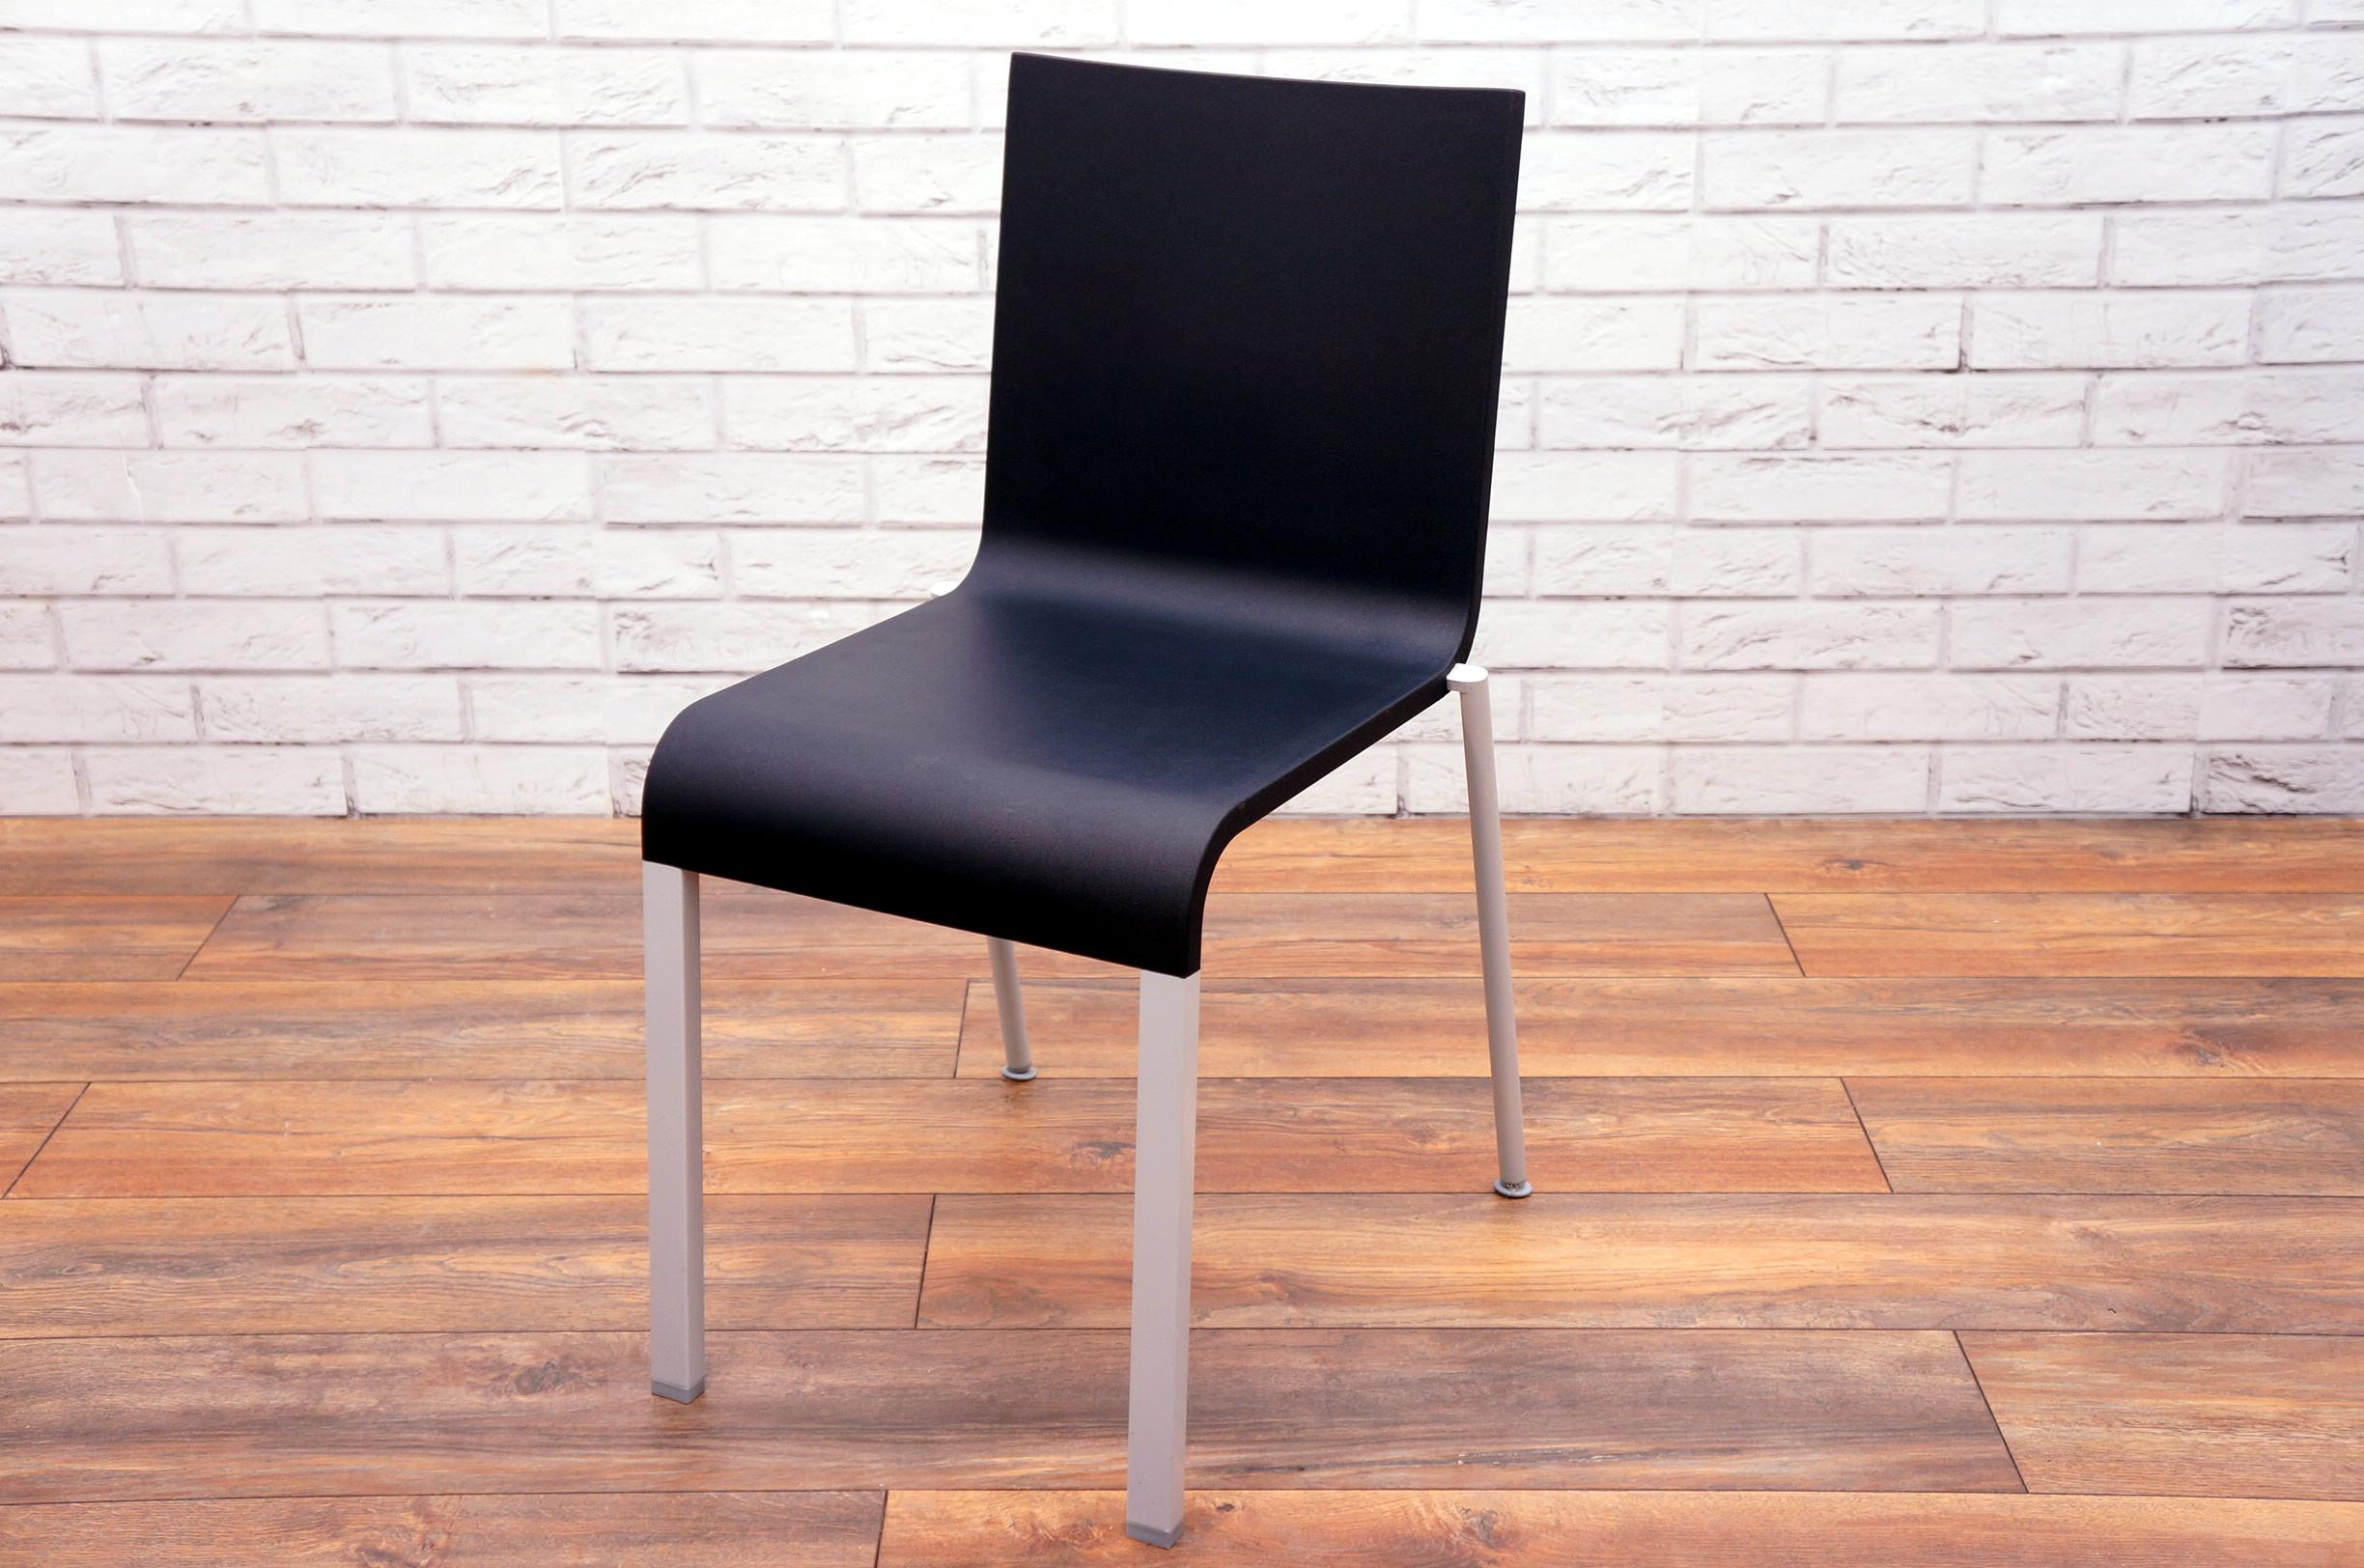 German Minimal Black Vitra Maarten van Severen Stacking Chairs, Contemporary Modern